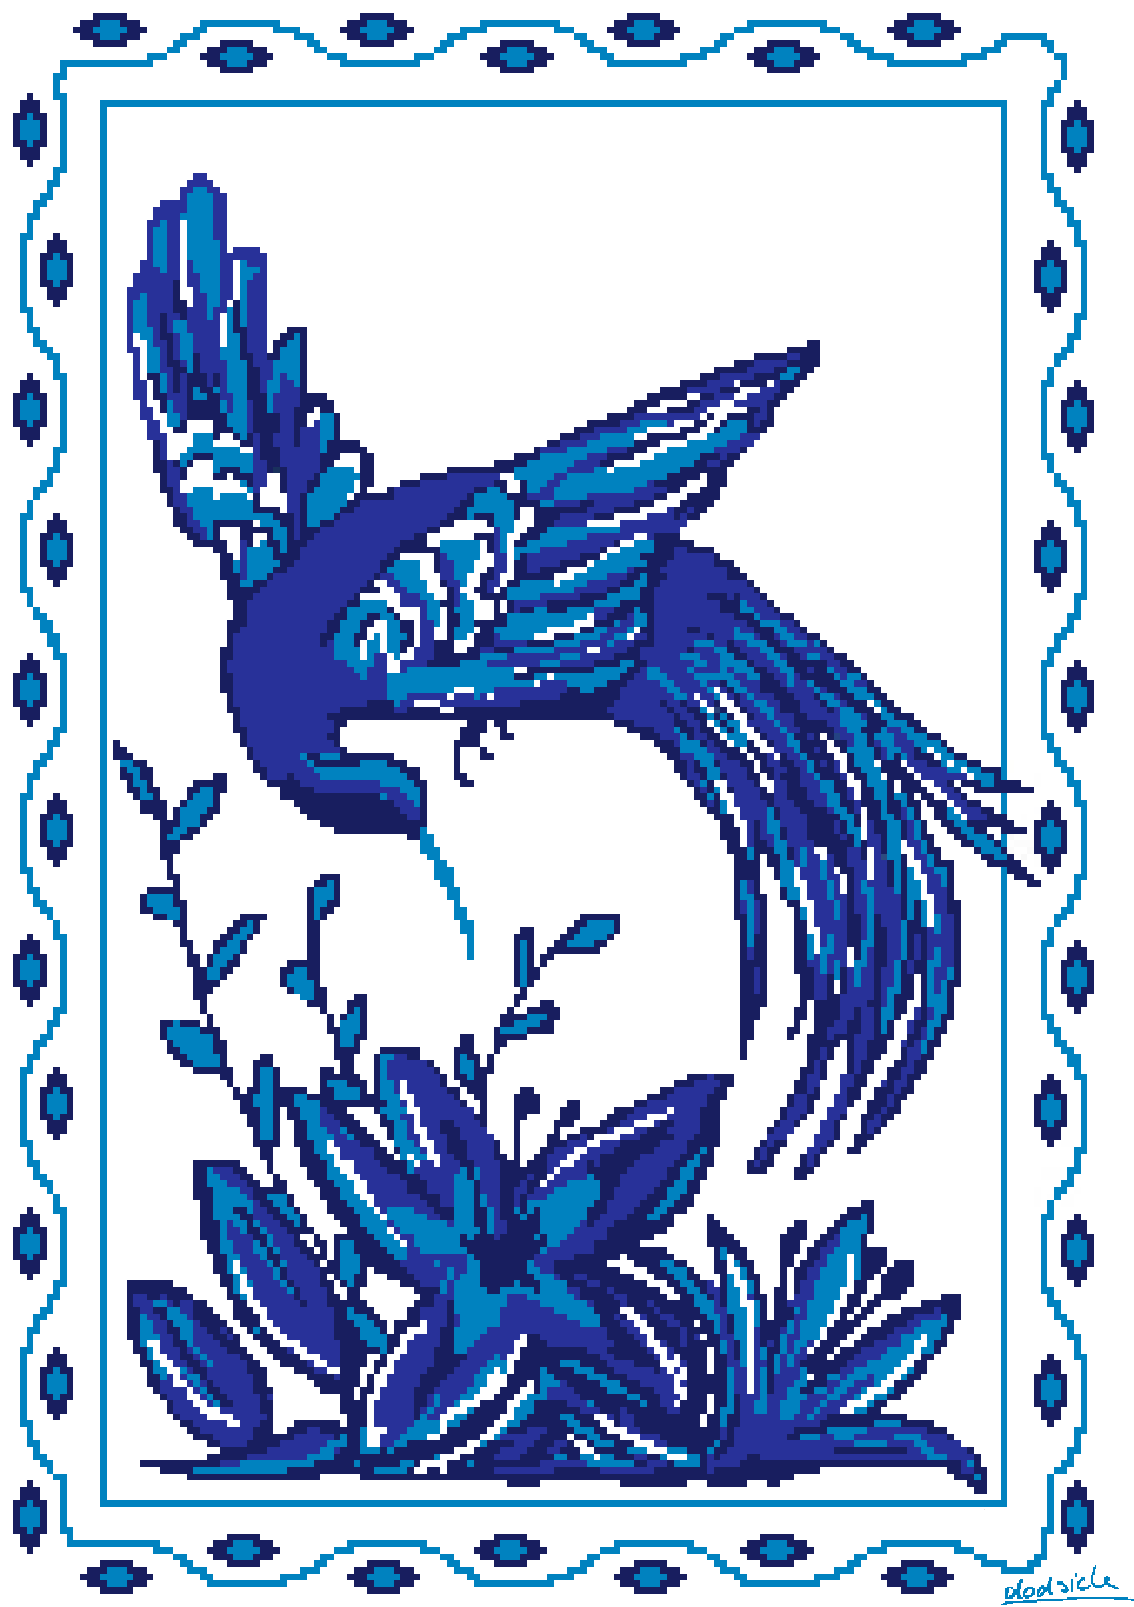 Delft Blue Birds collection image